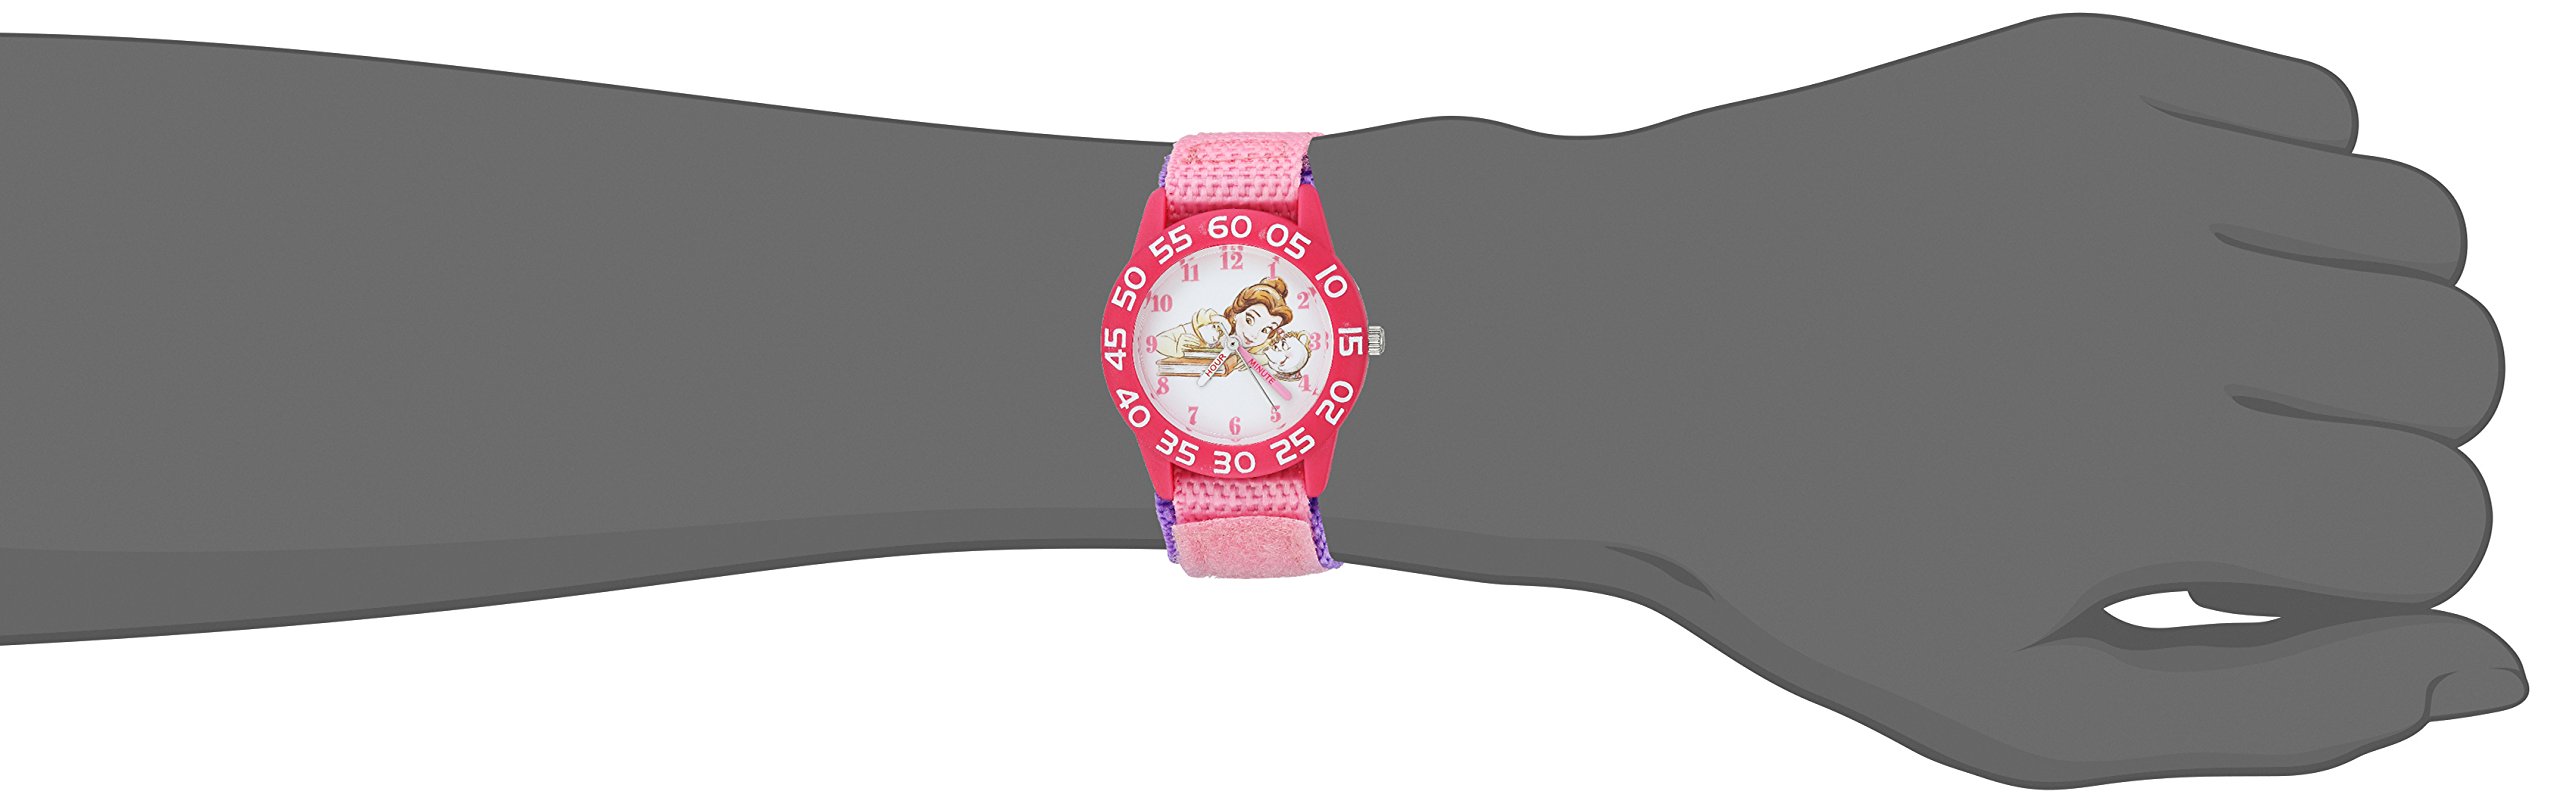 Disney The Princess & The Frog Kids' WDS000222 Princess Belle Analog Display Analog Quartz Pink Watch